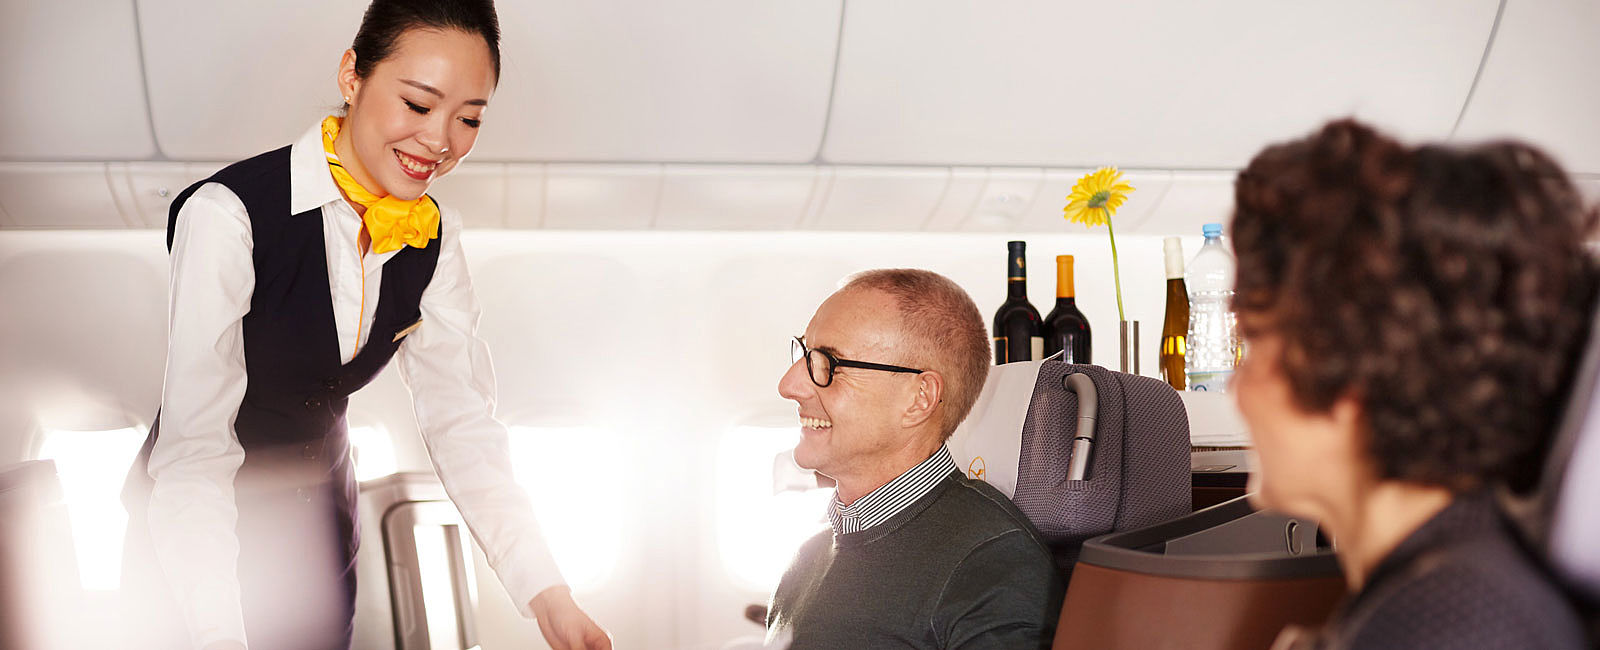 AIRLINE ANGEBOTE
 Im Sommer mit Star Alliance in Business Class nach Mexiko ab 1.475 Euro 
